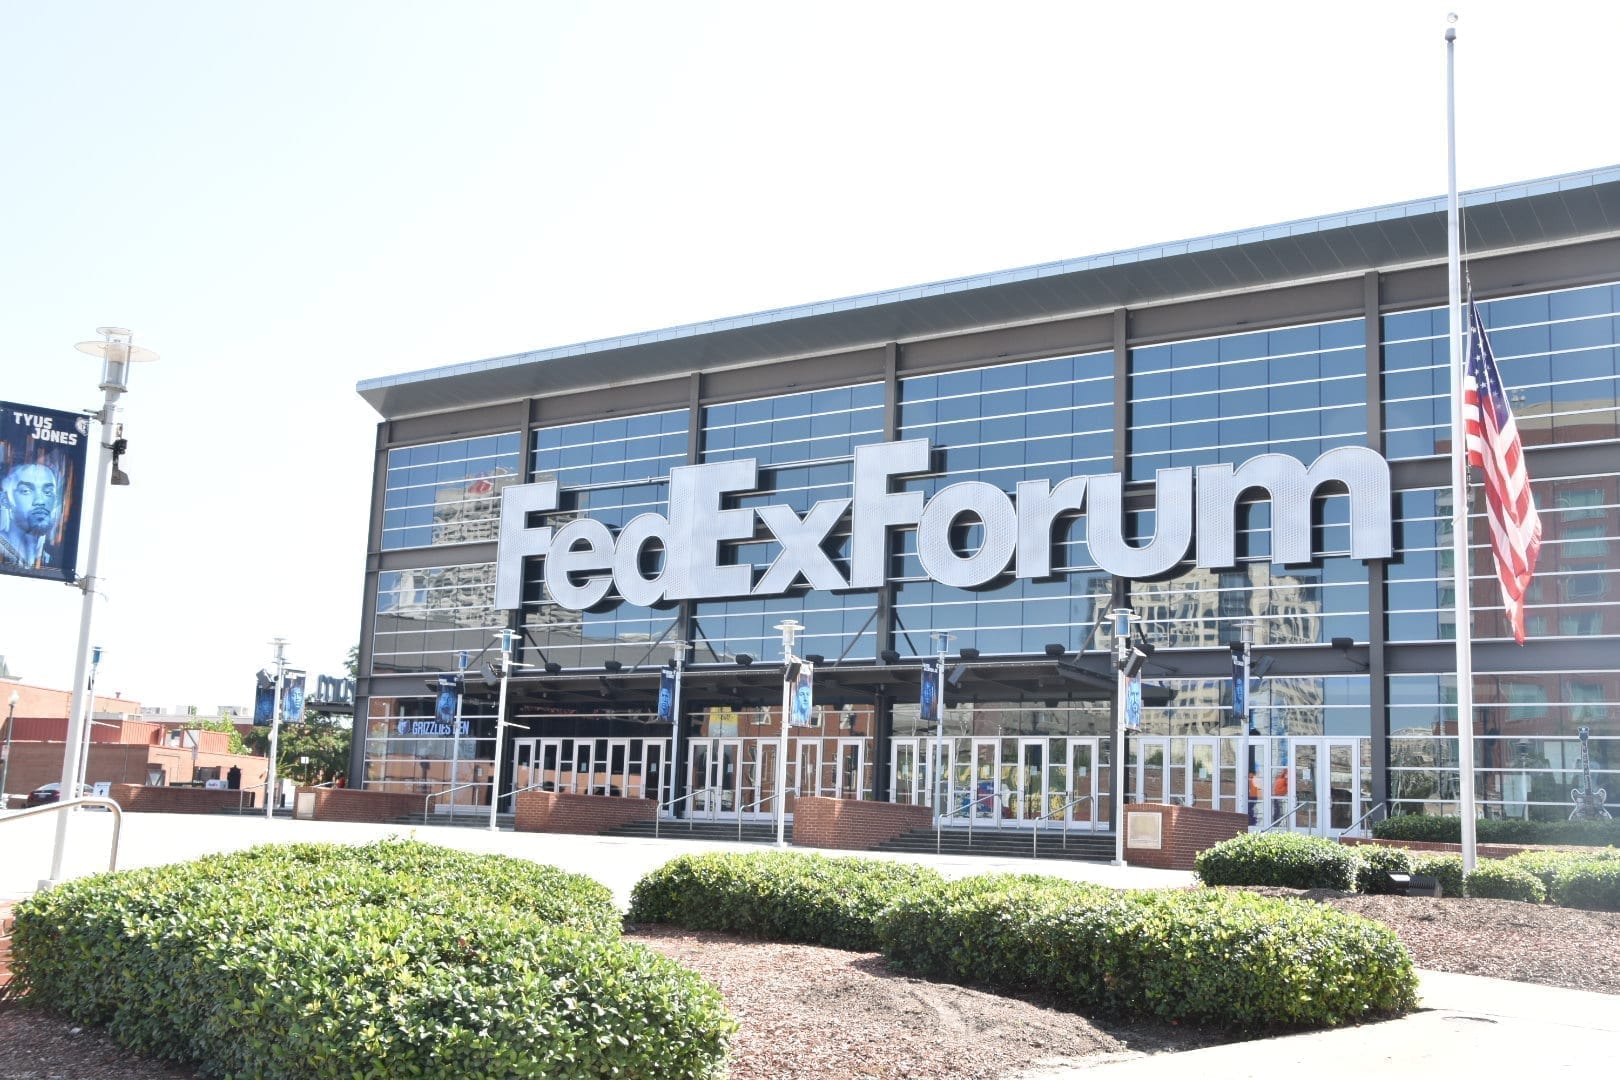 Fed ExForum Memphis Tennessee